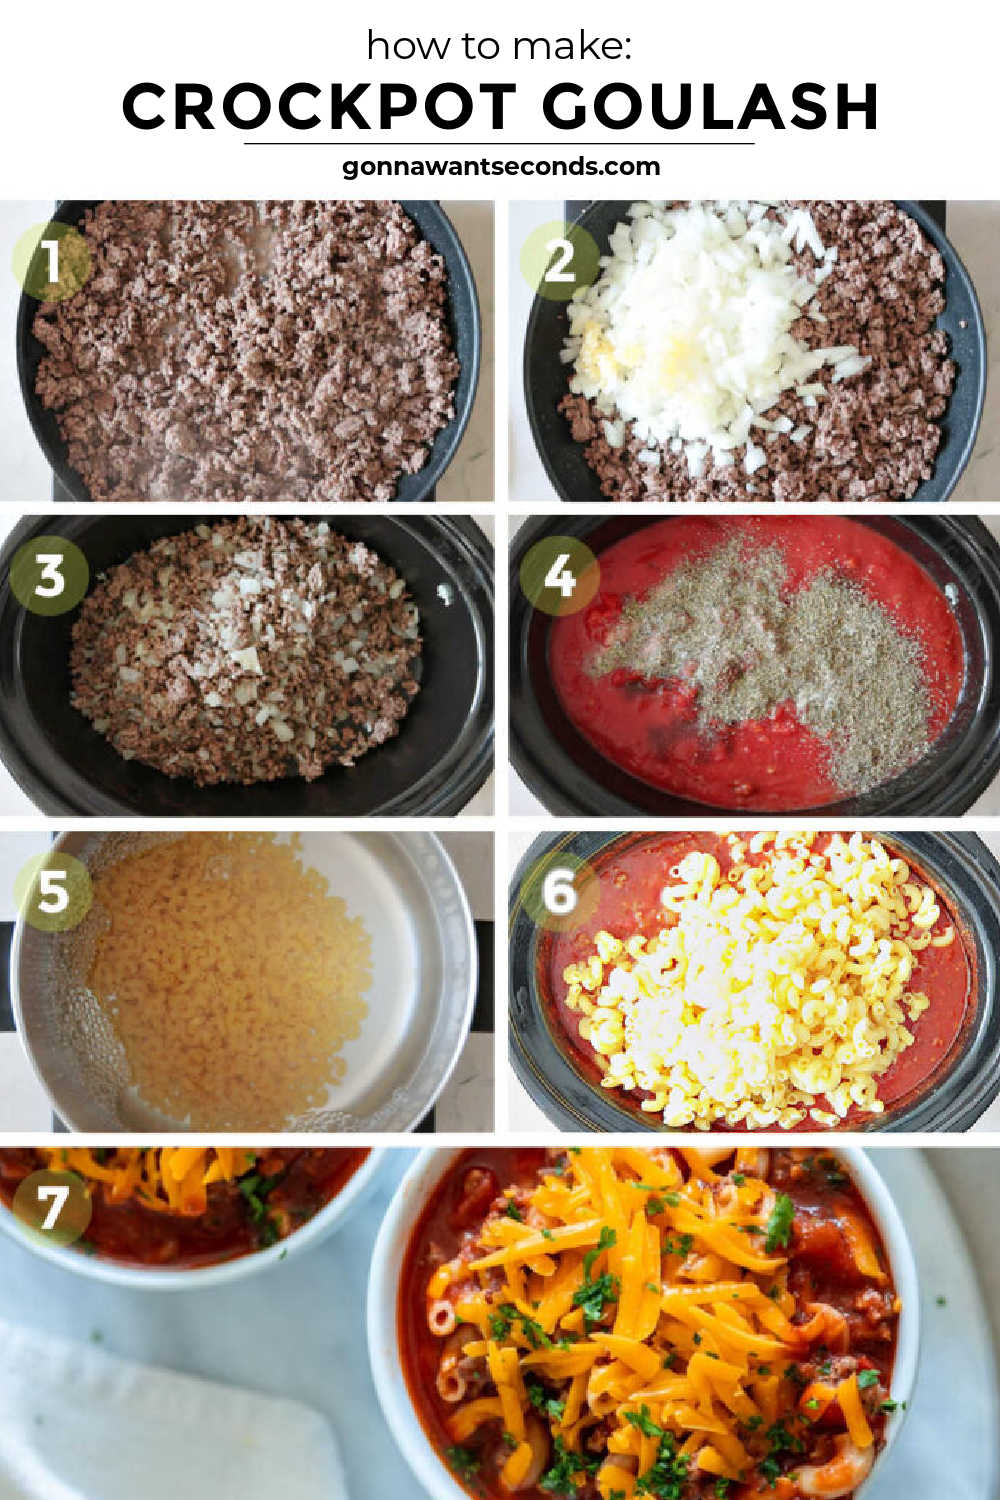 Step by step how to make crockpot goulash